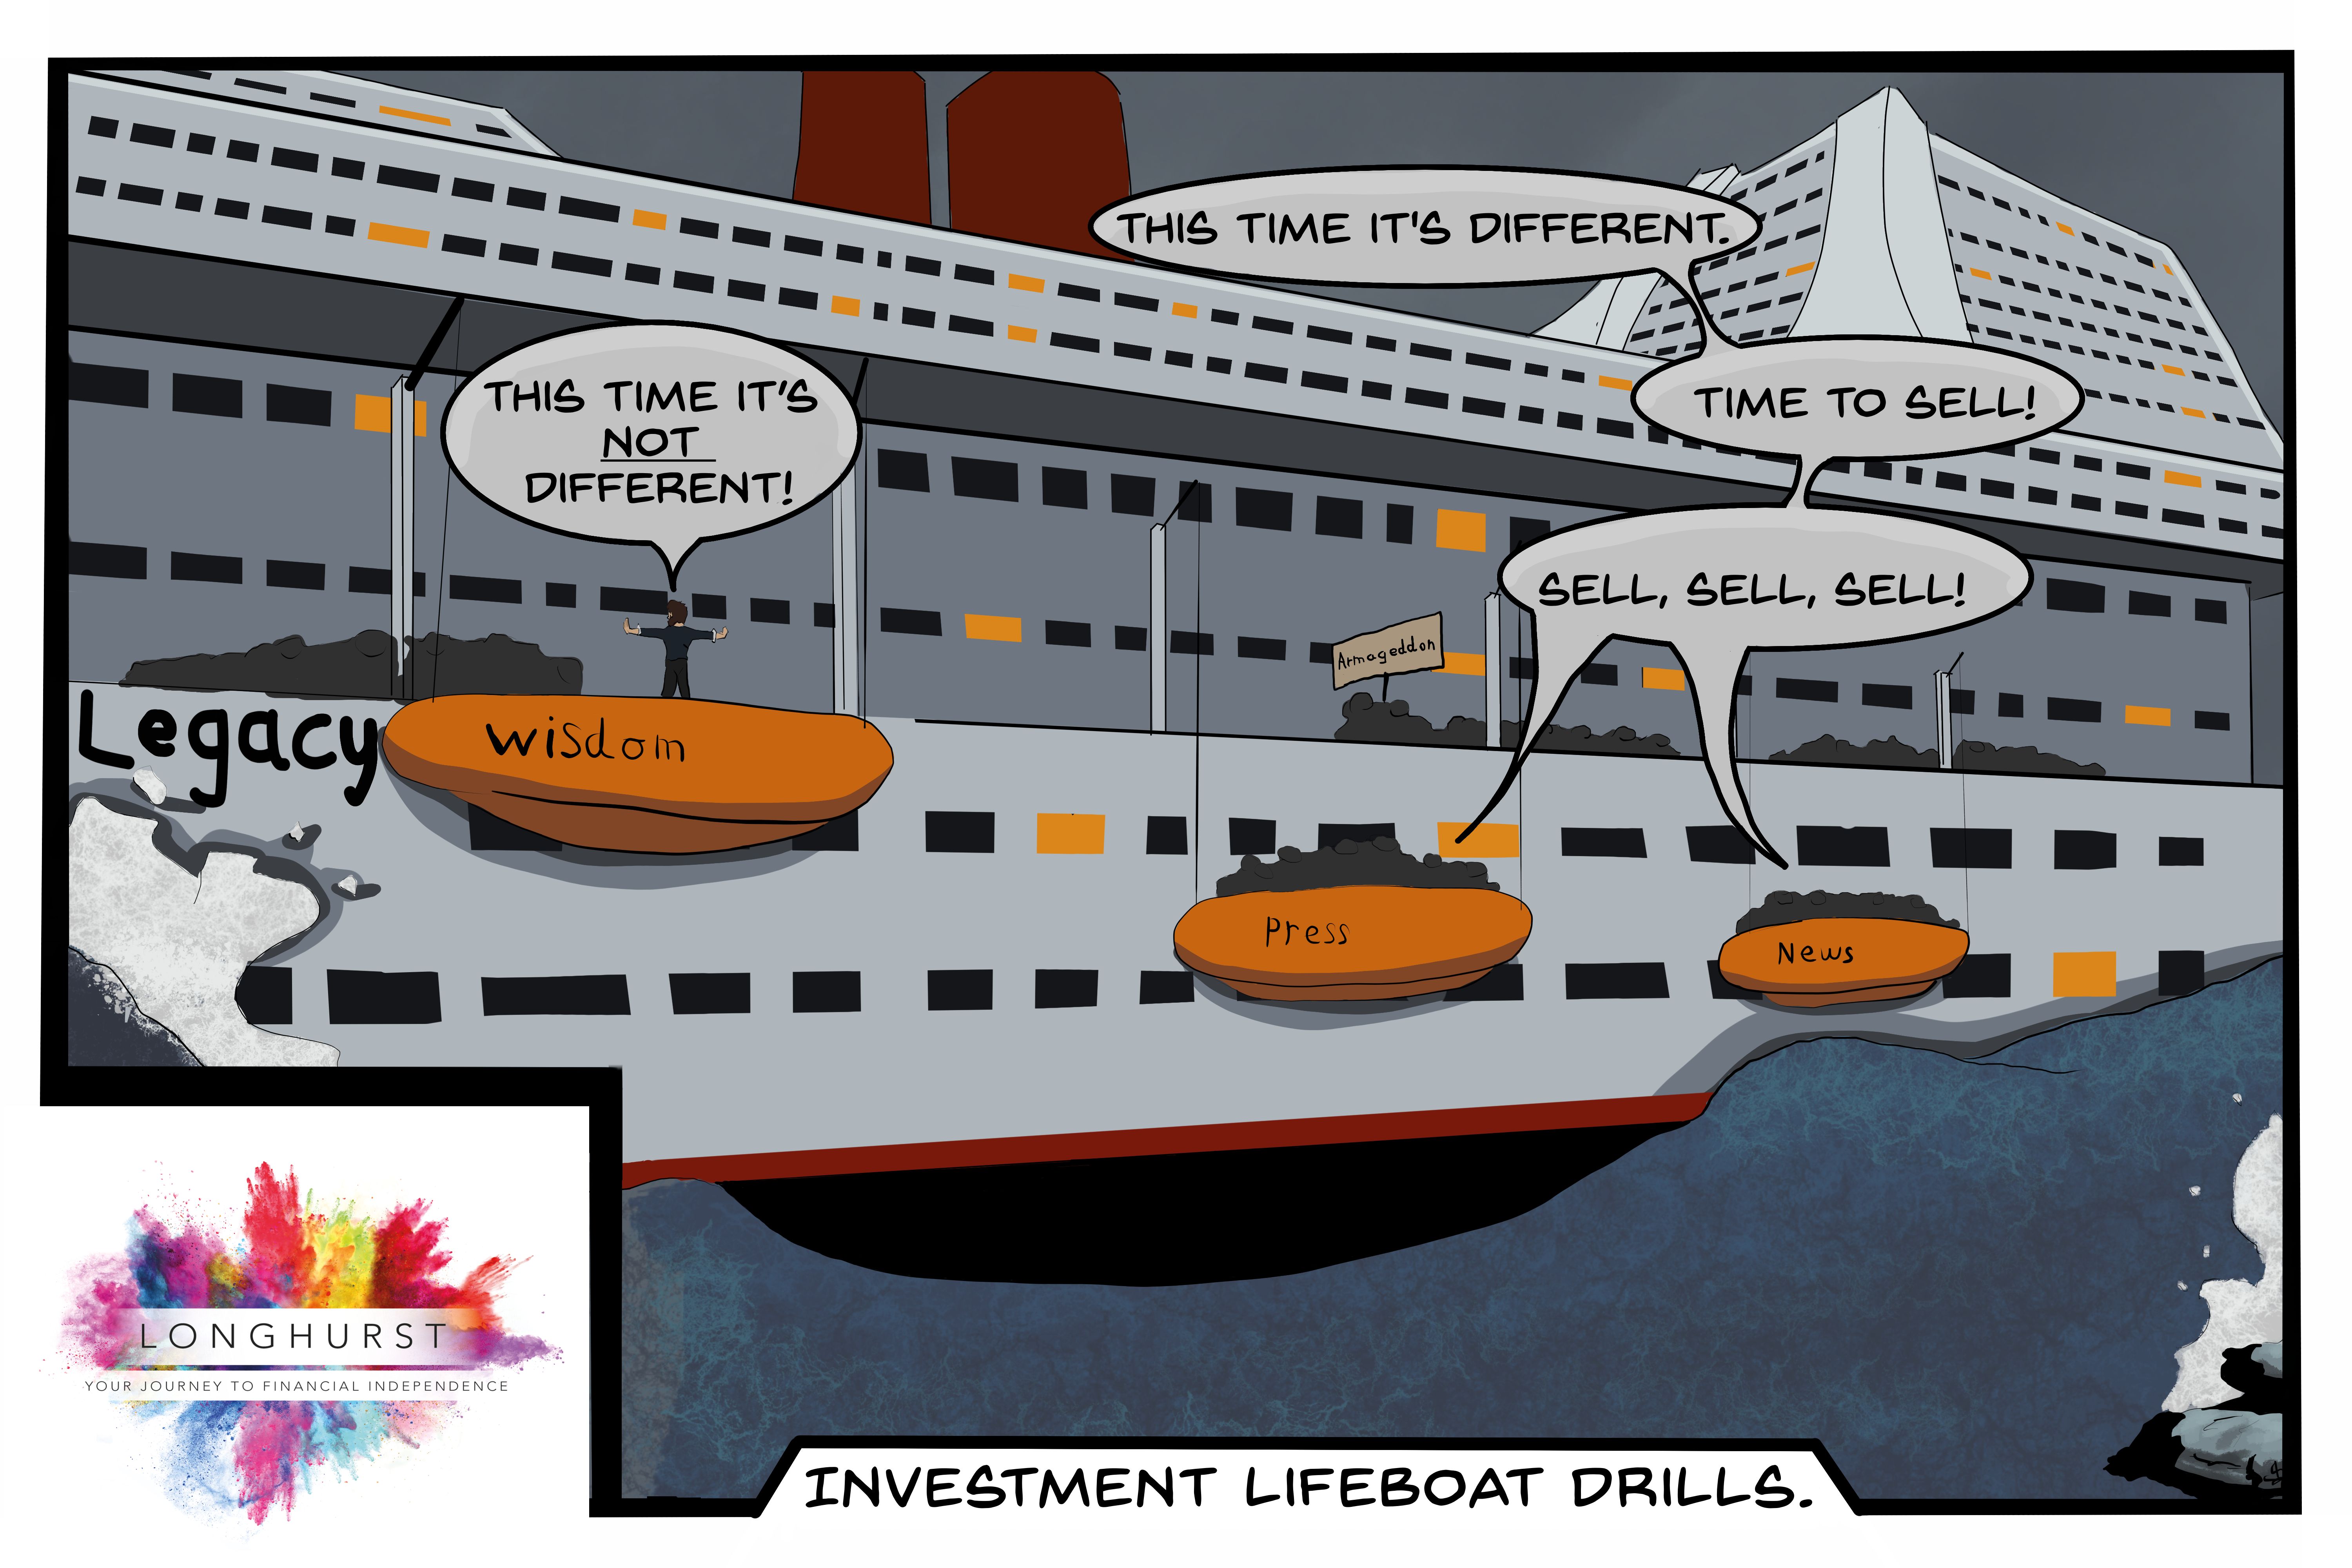 Longhurst Investment Lifeboat Drills